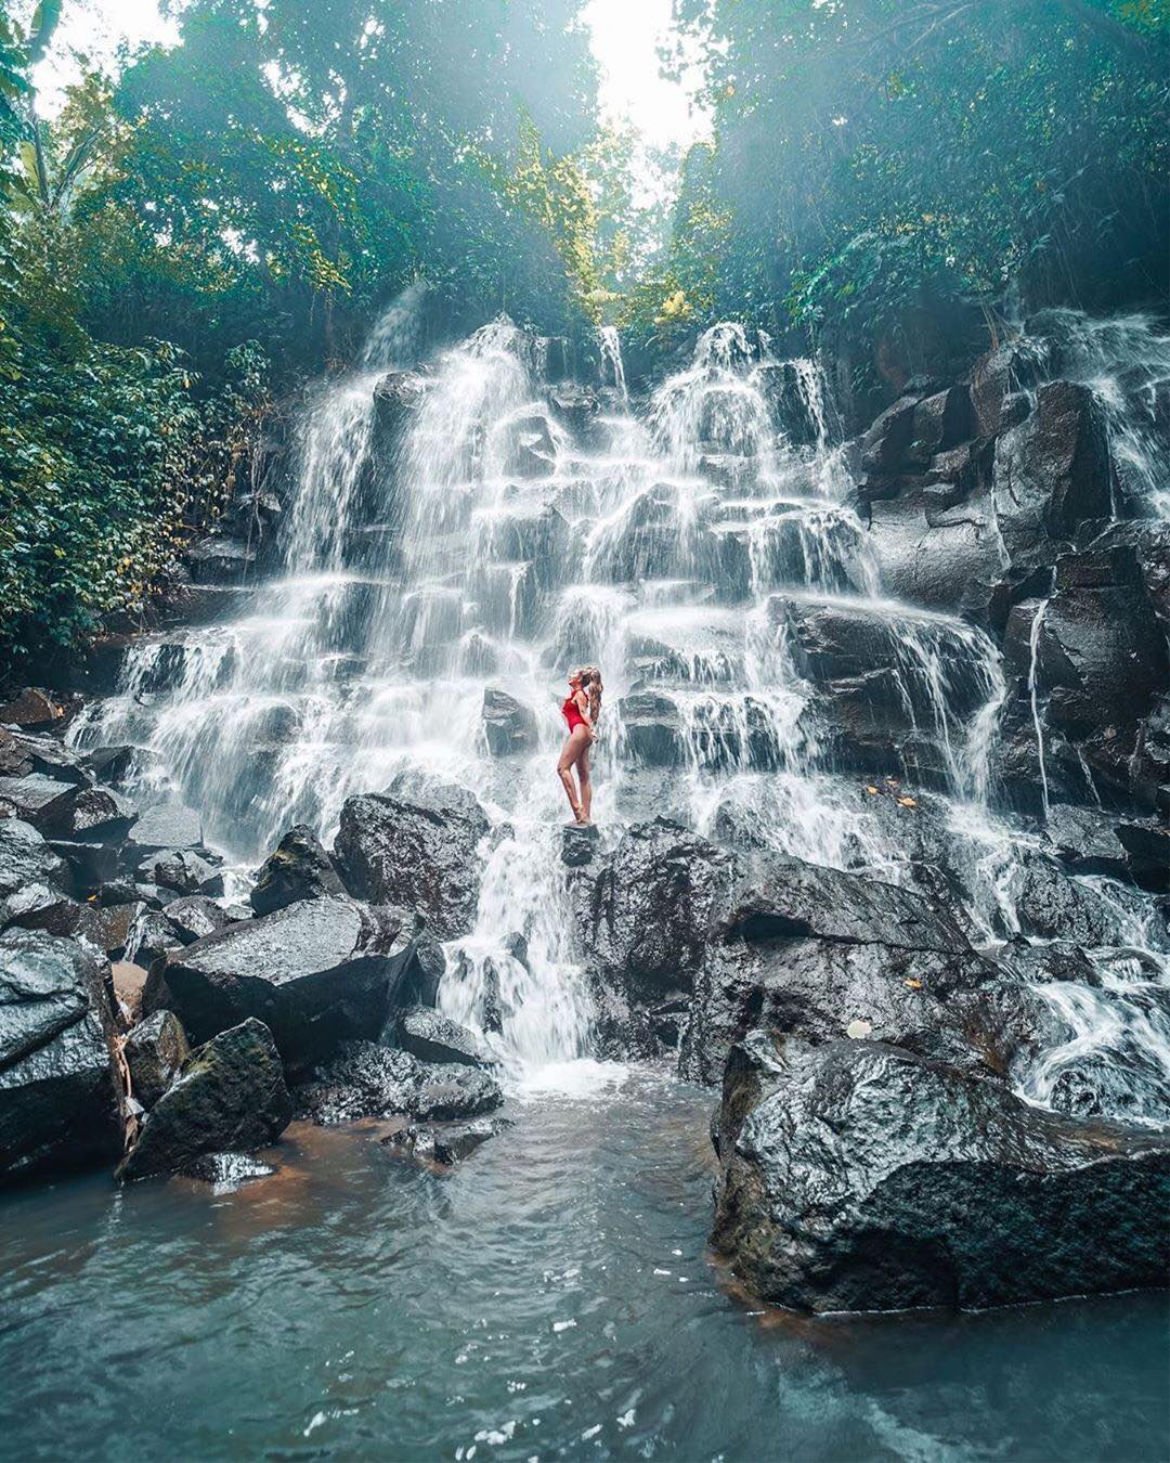 Kanto Lampo Waterfall - Best Waterfalls Near Seminyak